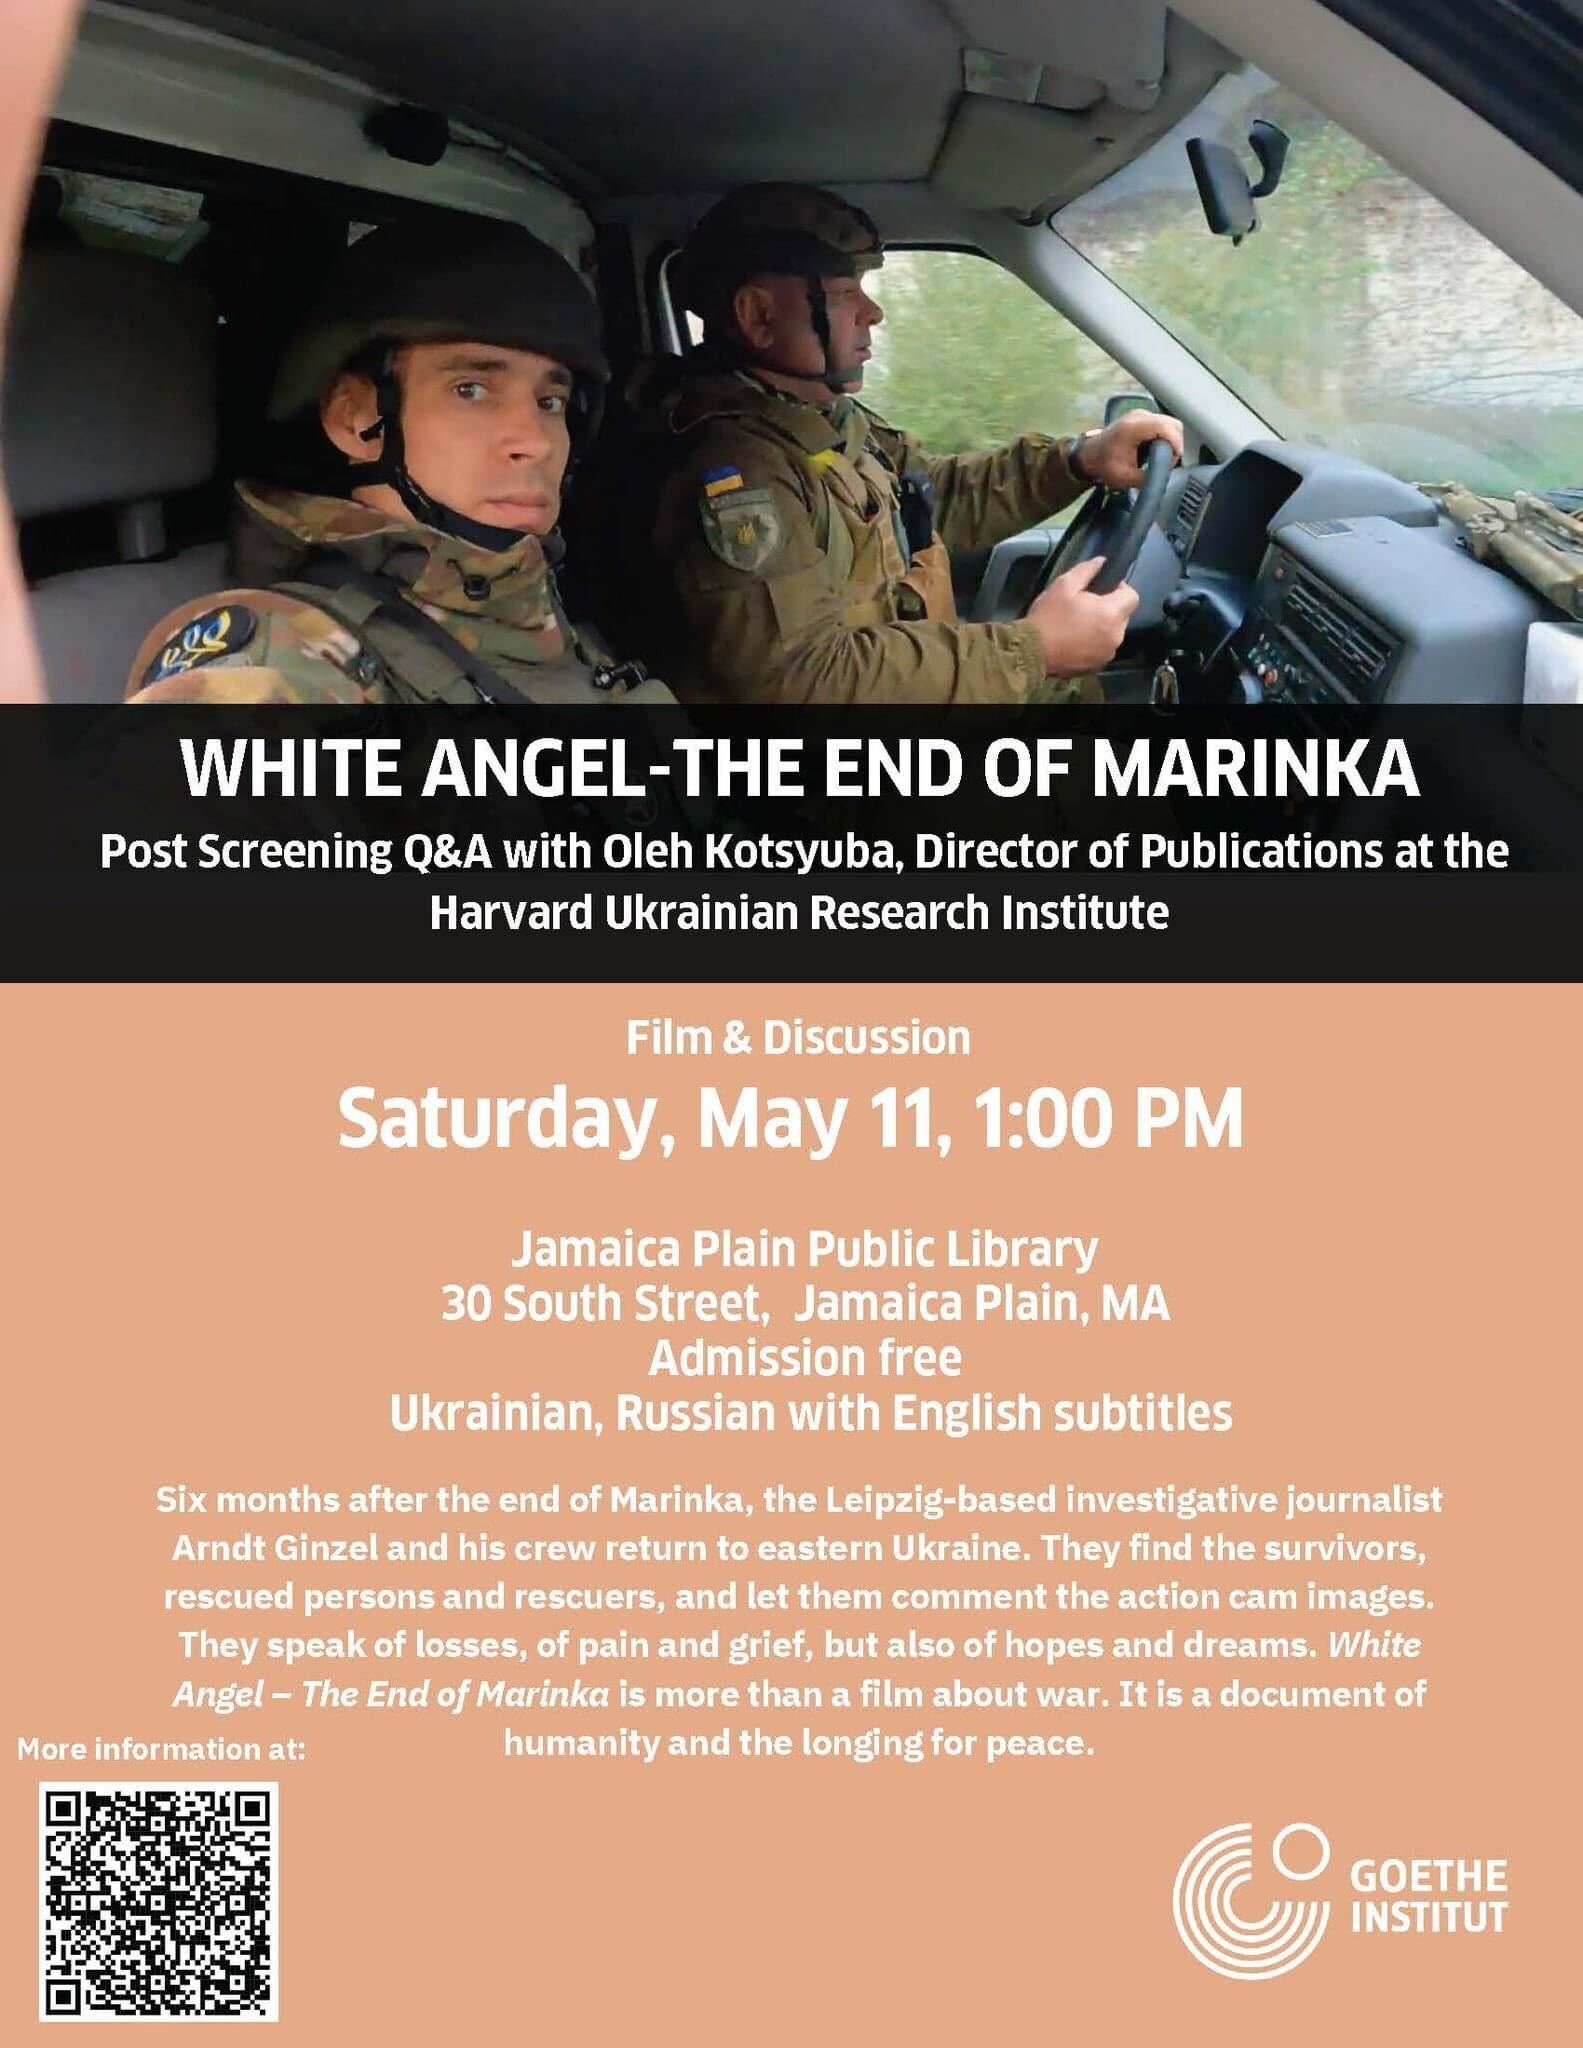 WHITE ANGEL: THE END OF MARINKA